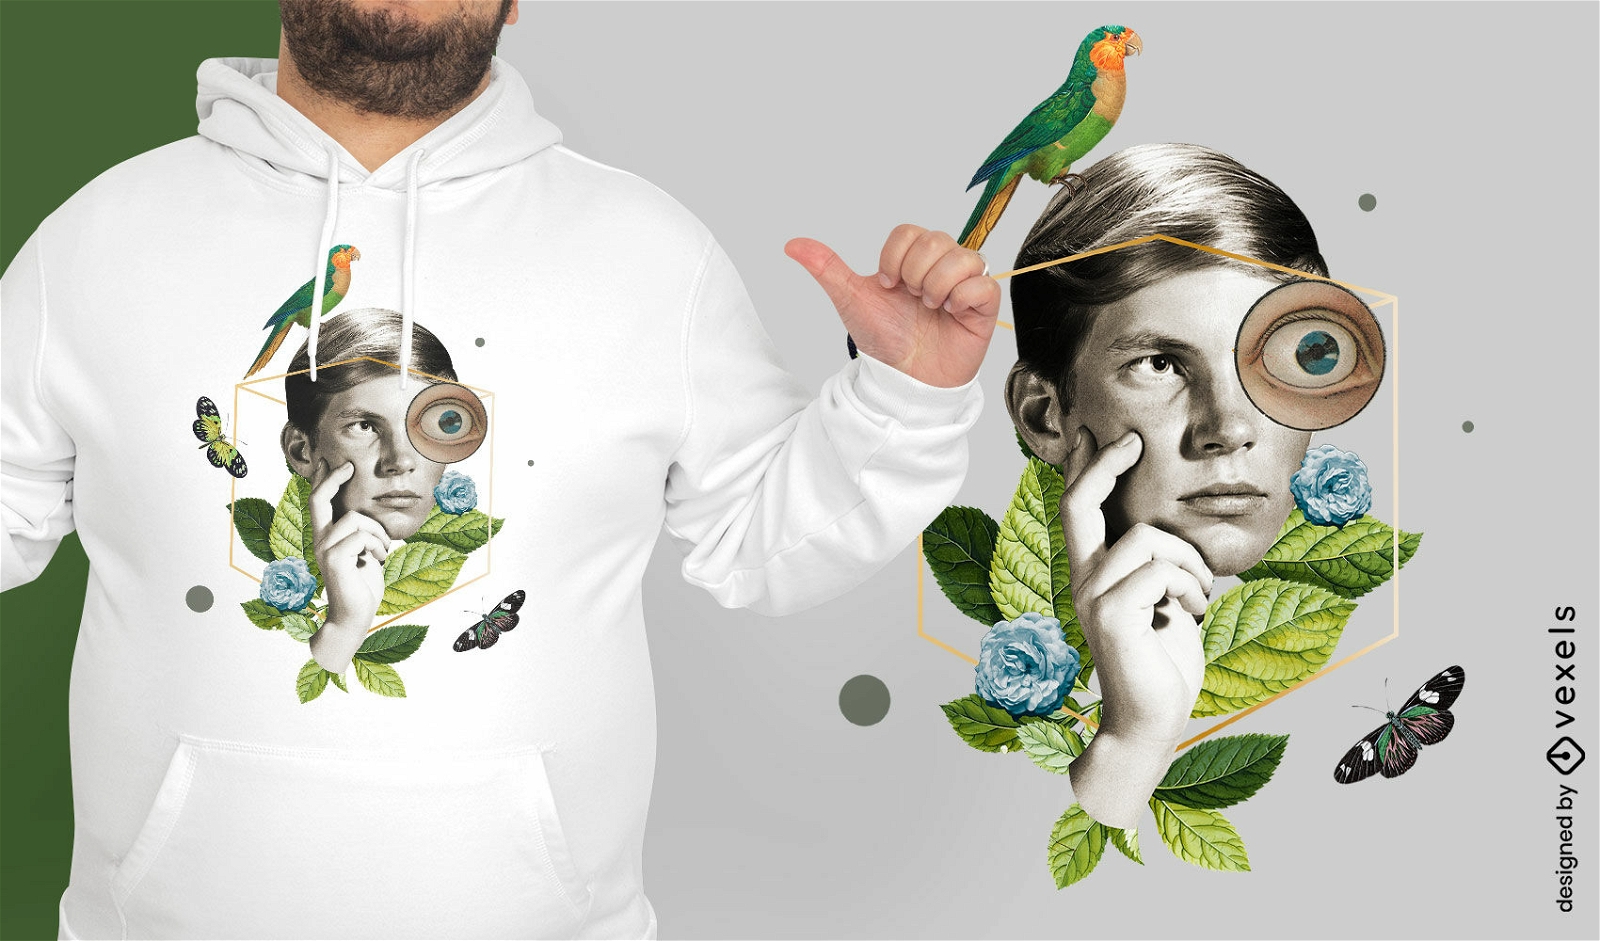 Child in absurd nature t-shirt design